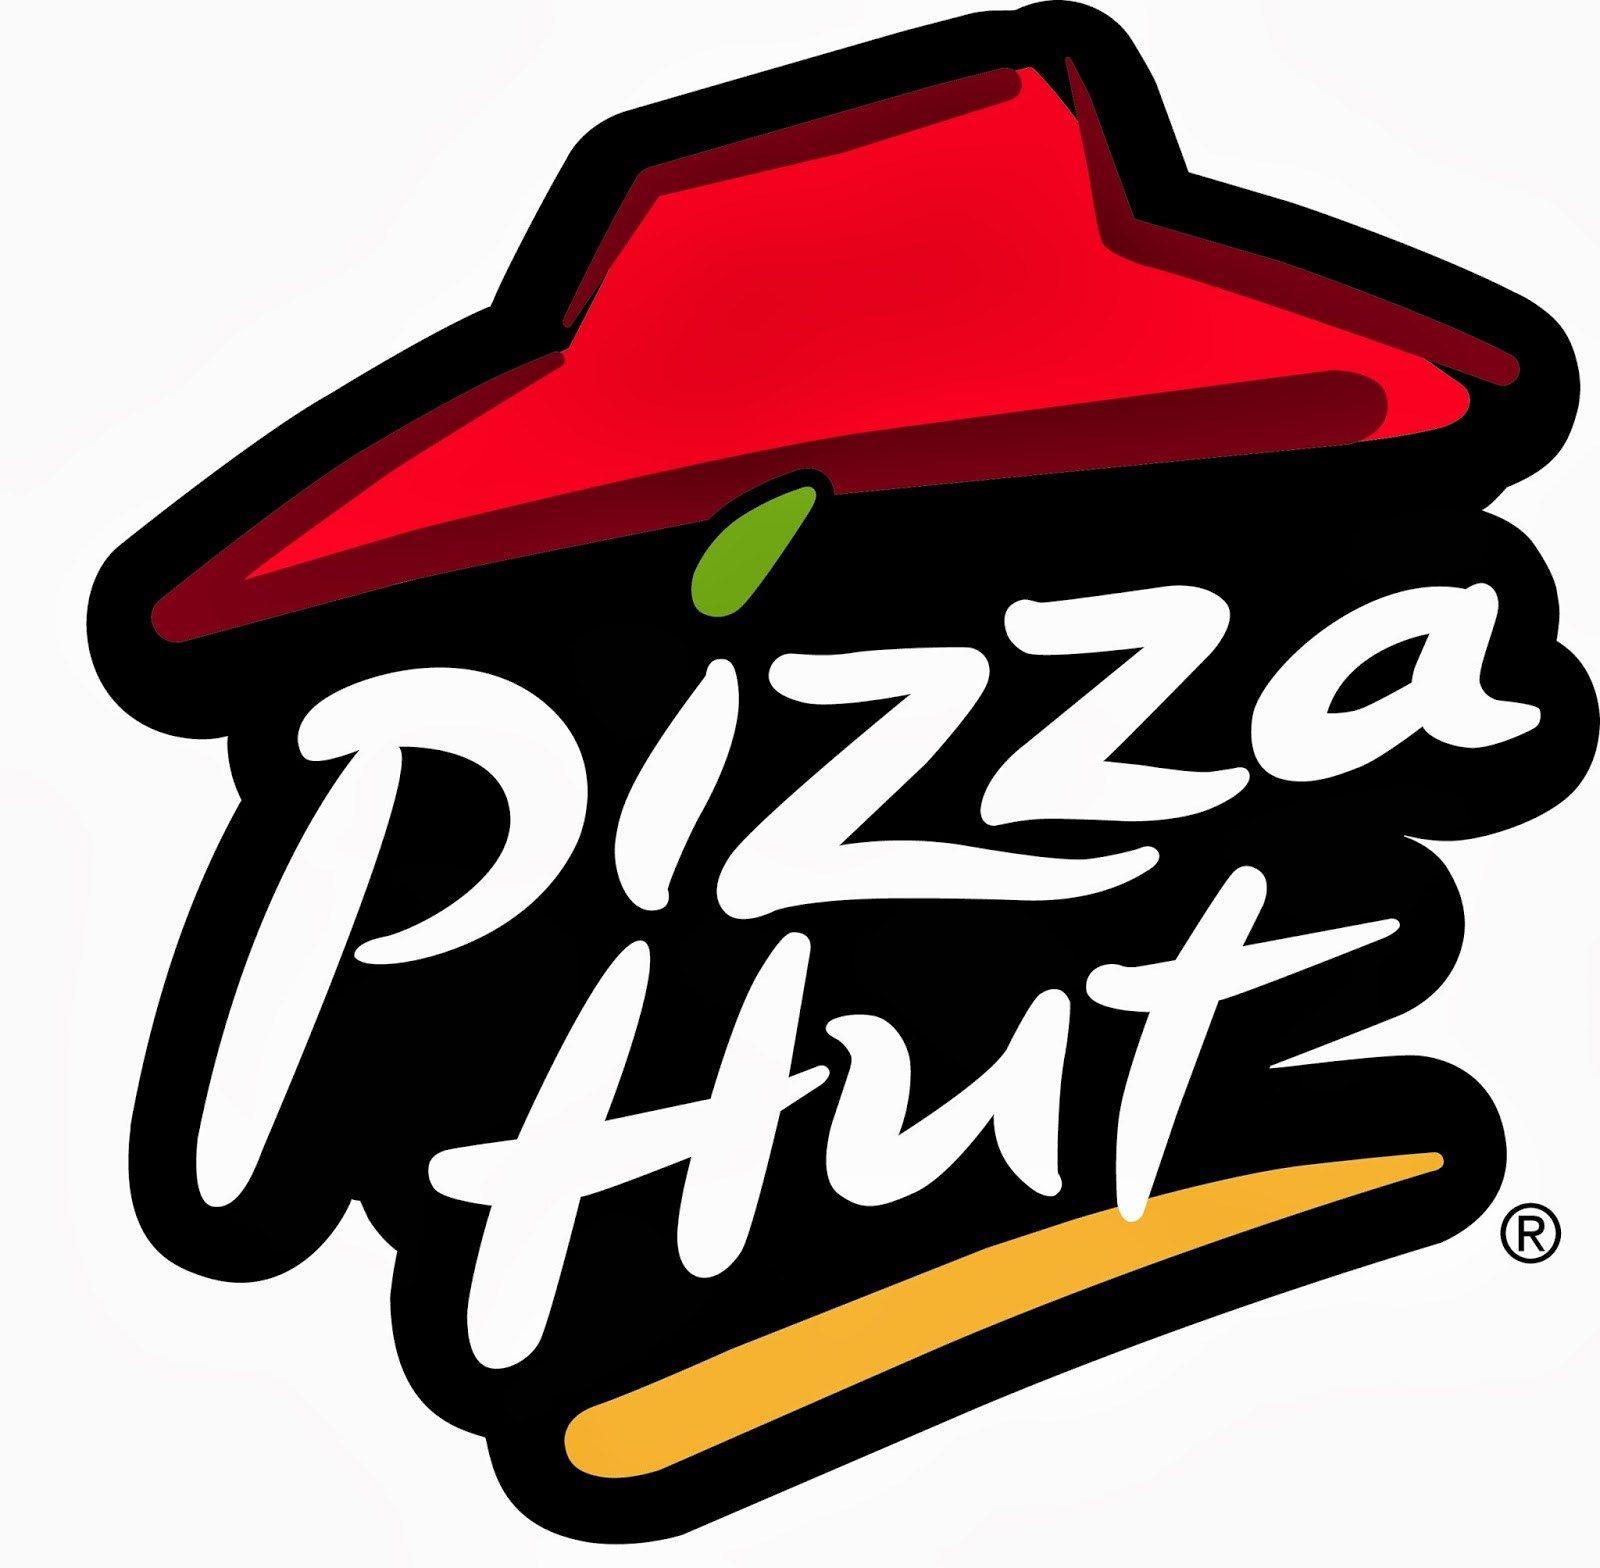 Free Pizza Hut Logo Image